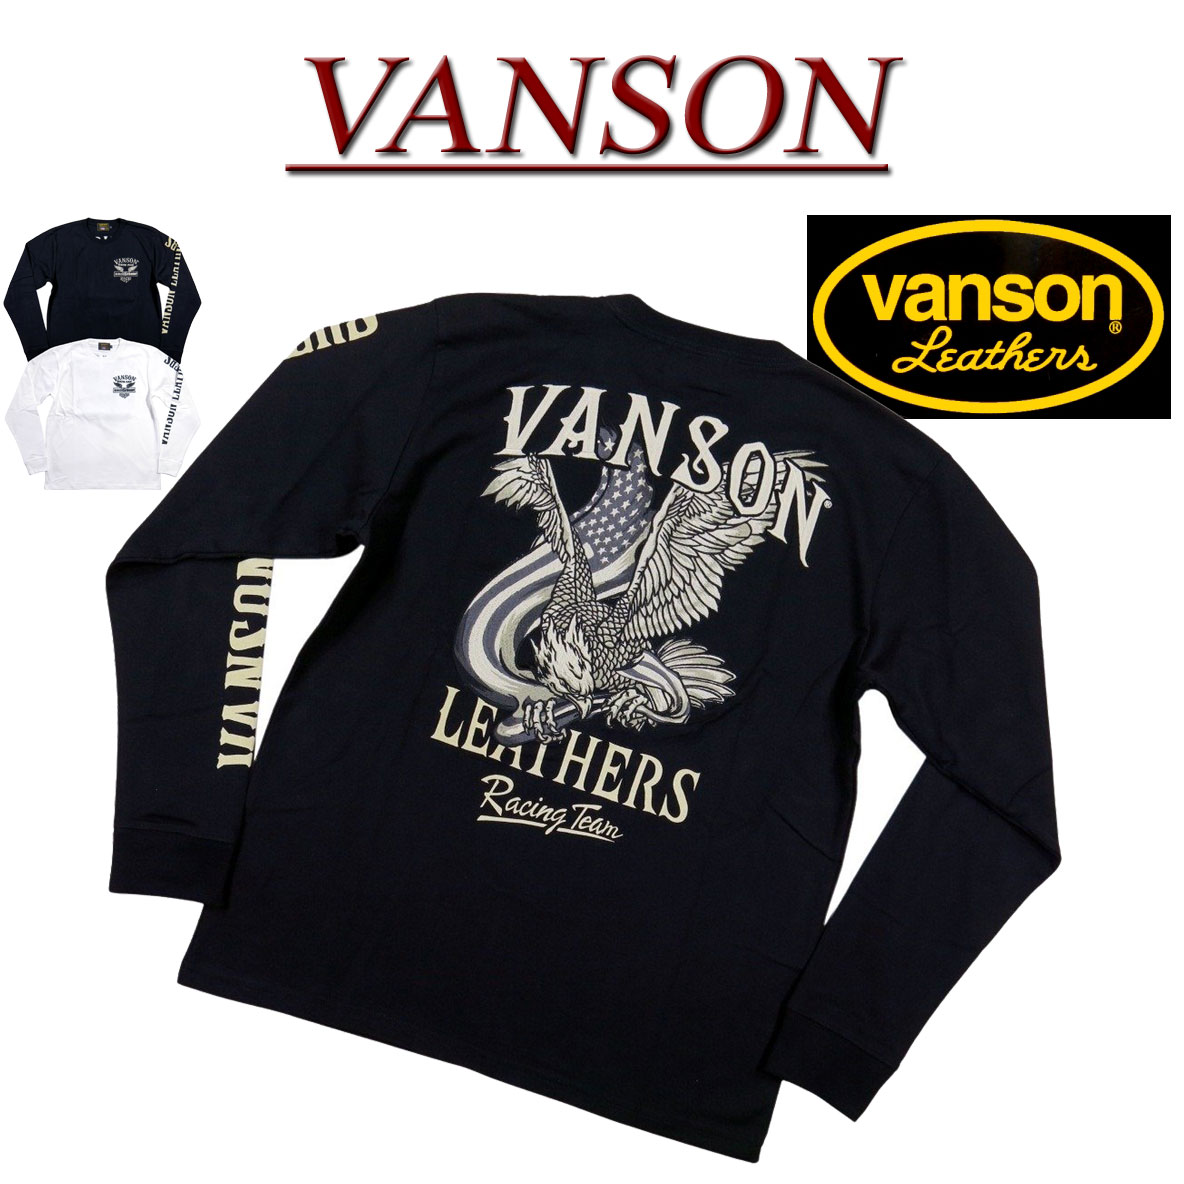  nd561 新品 VANSON アメリカンイーグル刺繍 ロンT NVLT-2311 メンズ バンソン AMERICAN EAGLE LONG SLEEVES T-SHIRT 長袖 Tシャツ ヴァンソン ロンティー 